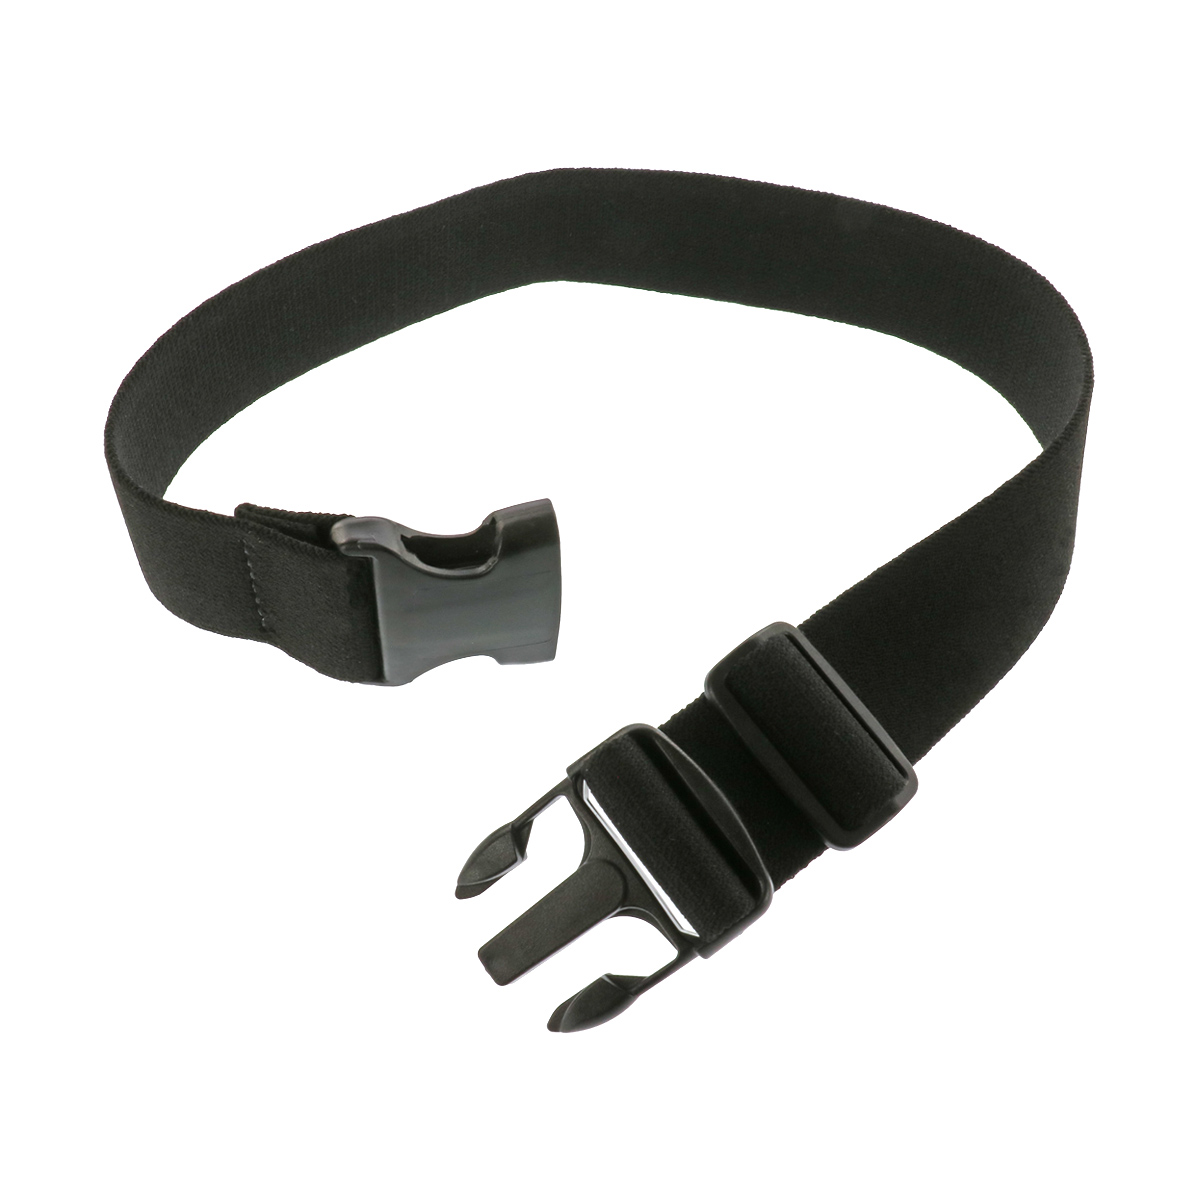 FasTrax PAC waist strap extender